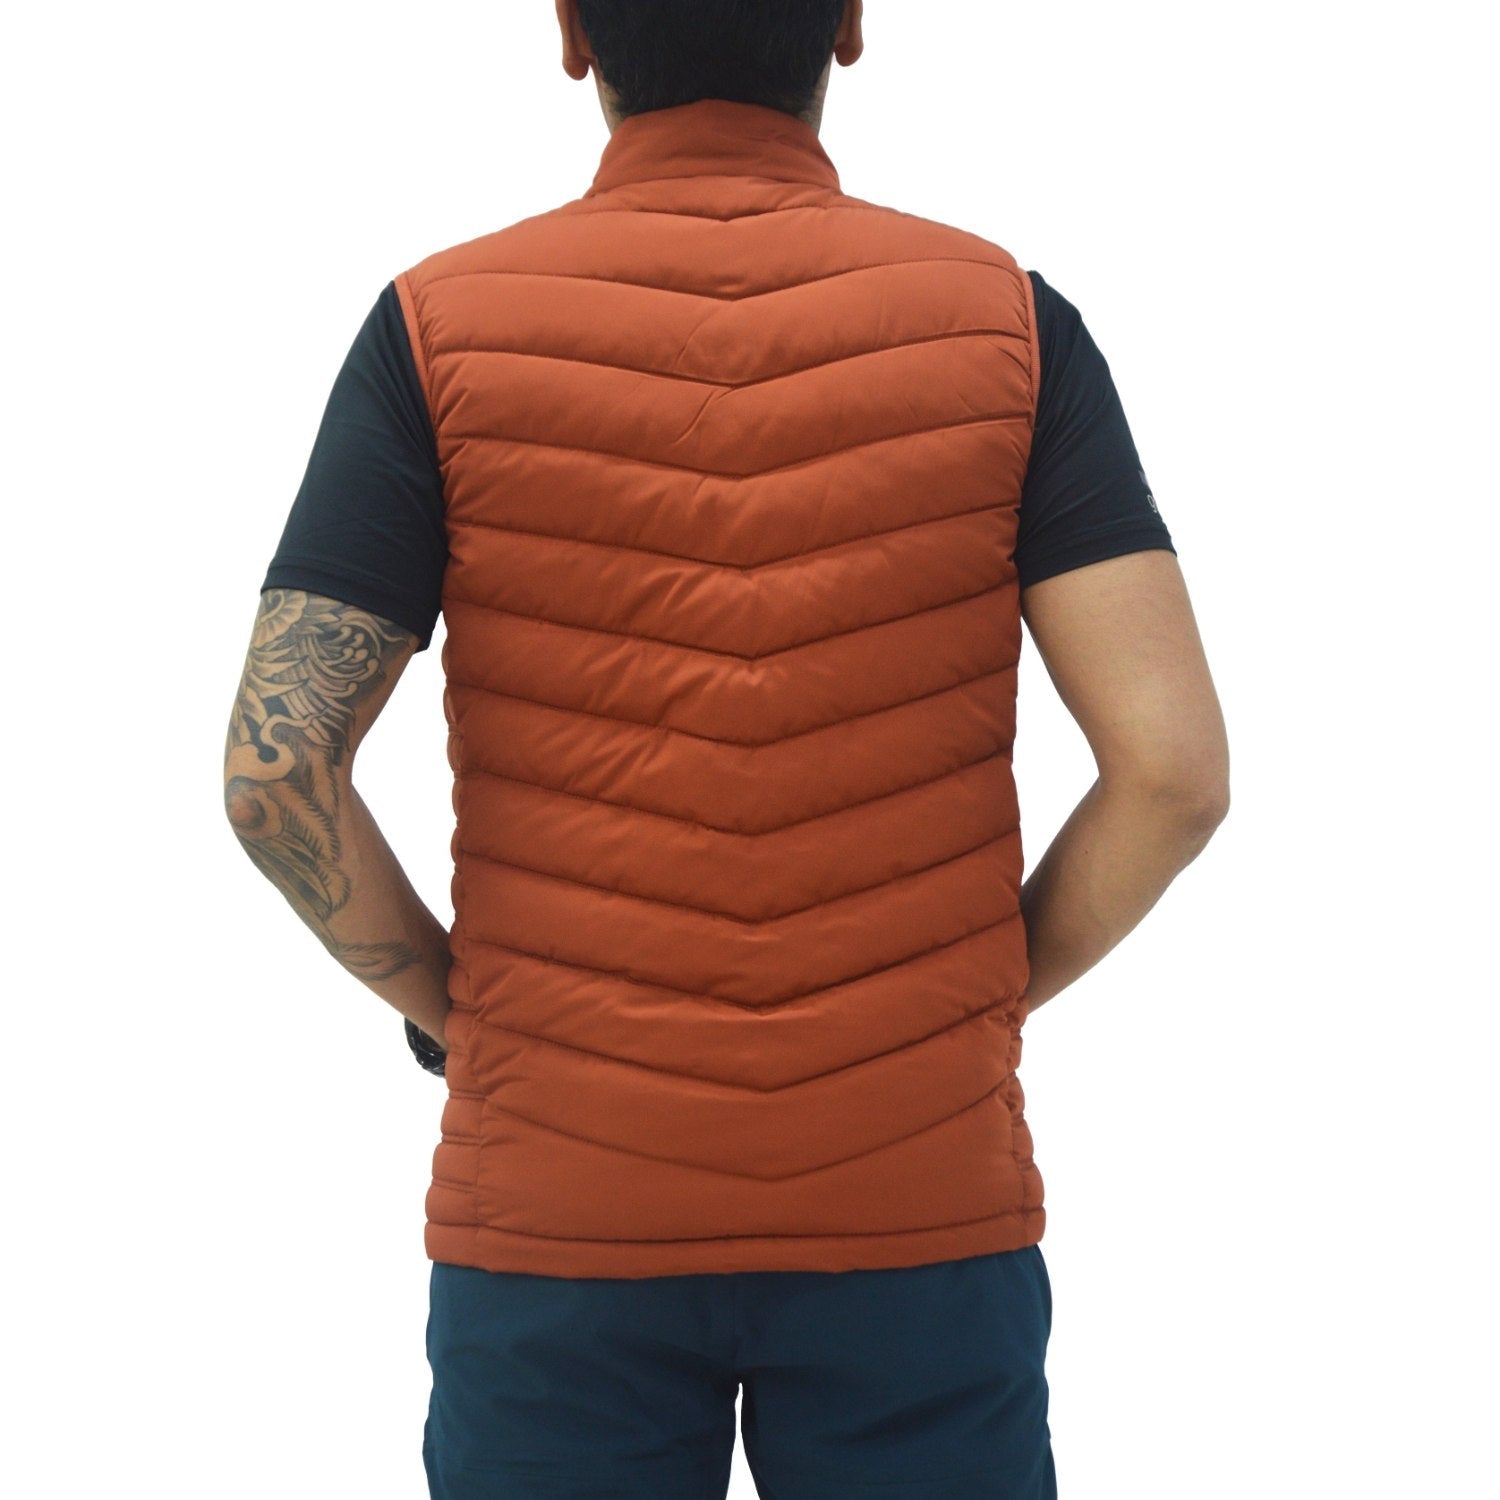 Buy Gokyo K2 Down Vest Jacket | Jackets at Gokyo Outdoor Clothing & Gear